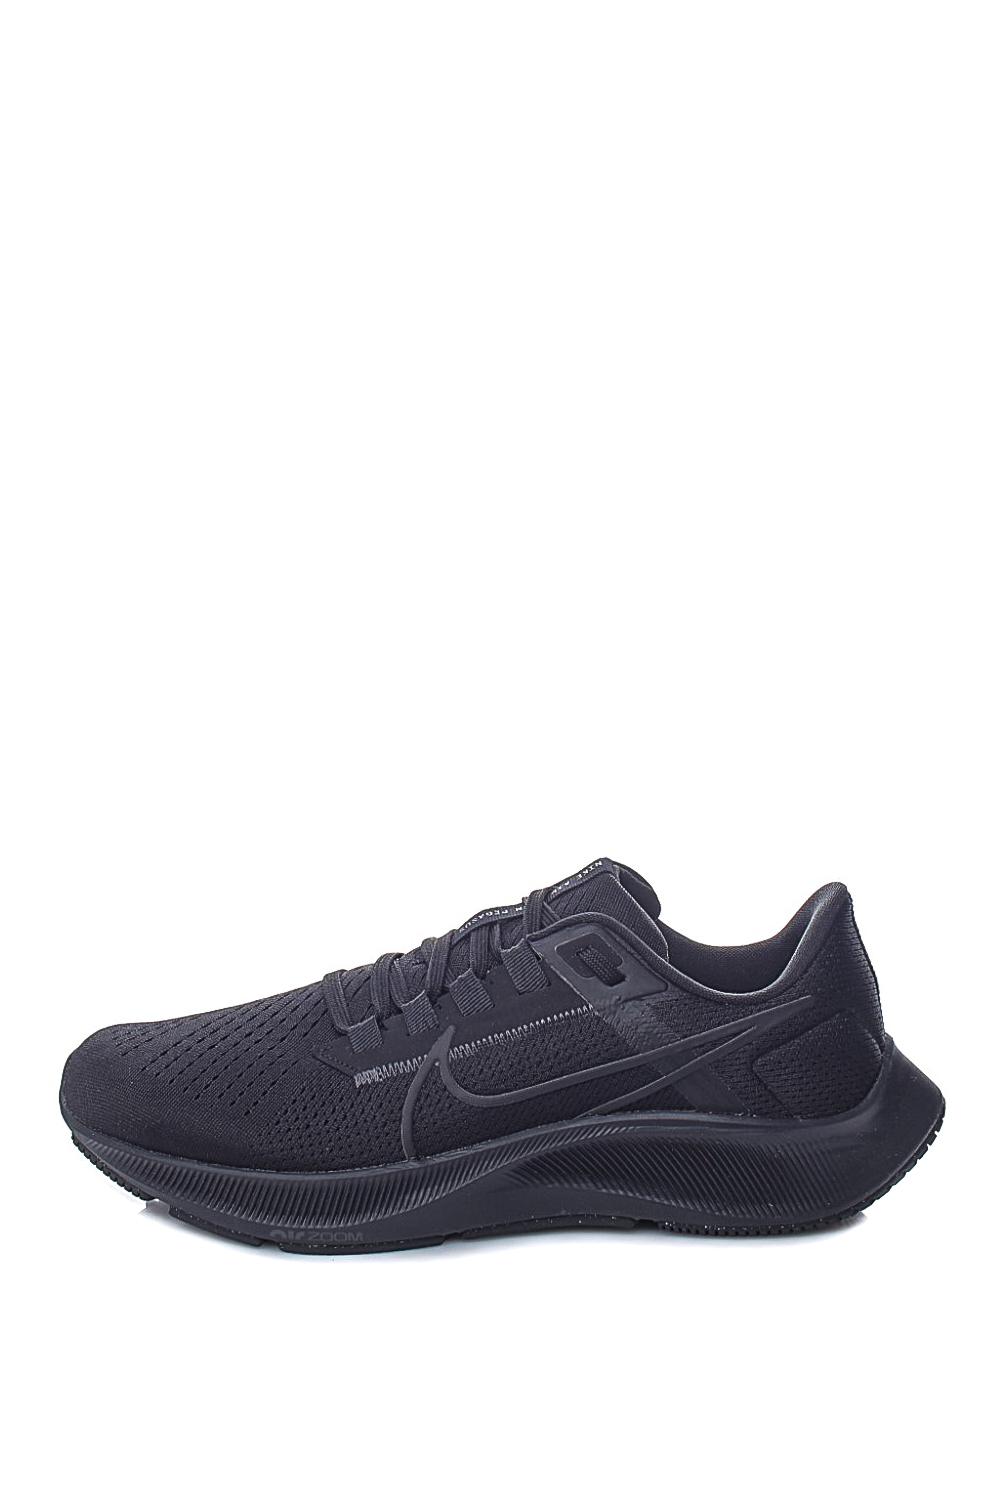 NIKE - Ανδρικά παπούτσια running NIKE AIR ZOOM PEGASUS 38 μαύρα Ανδρικά/Παπούτσια/Αθλητικά/Running